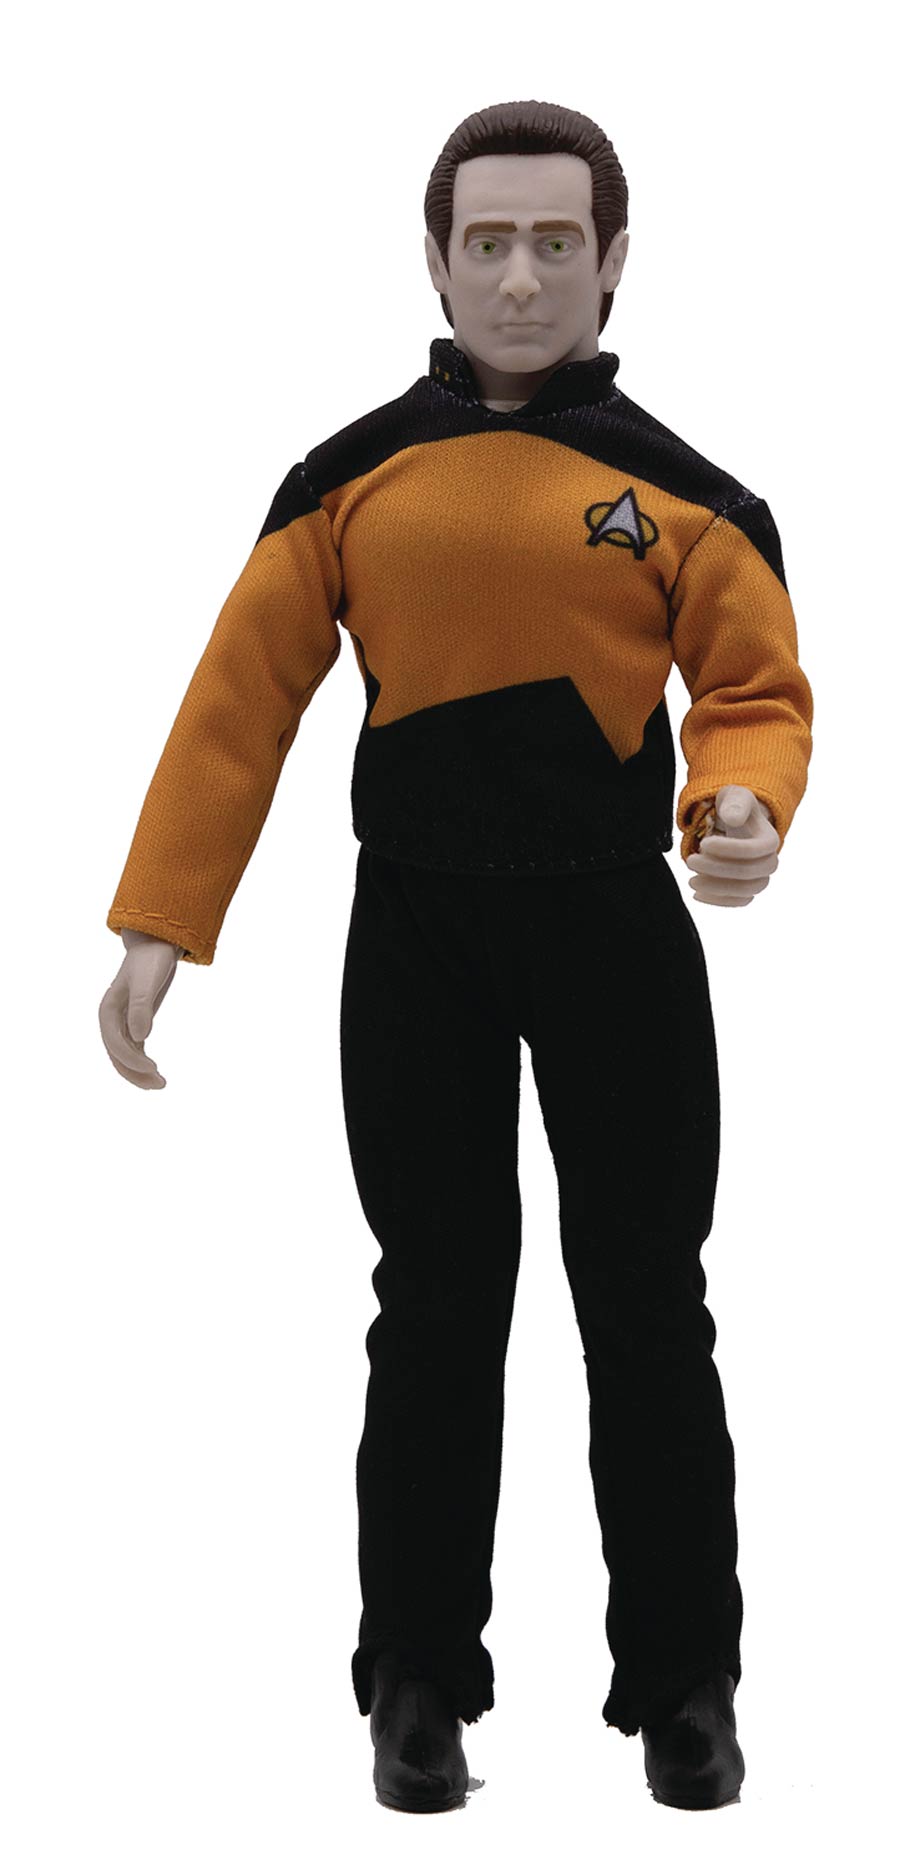 Mego Sci-Fi Star Trek The Next Generation 8-Inch Action Figure - Lt Data